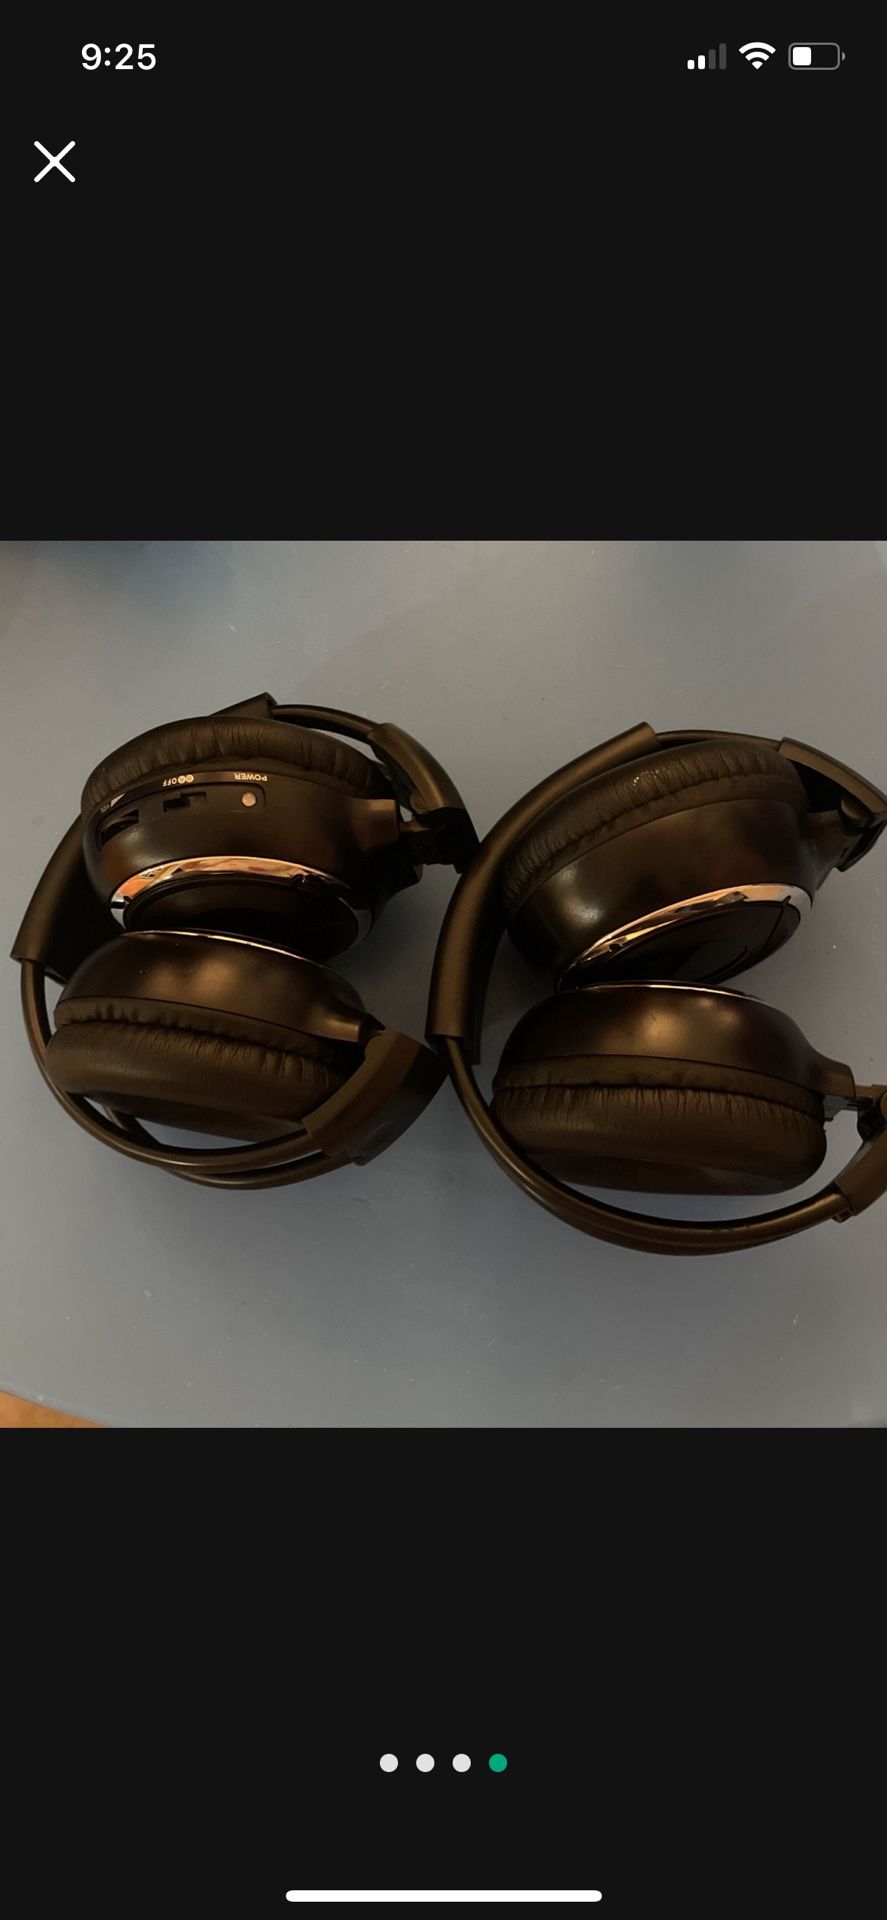 2 Infared Headphones